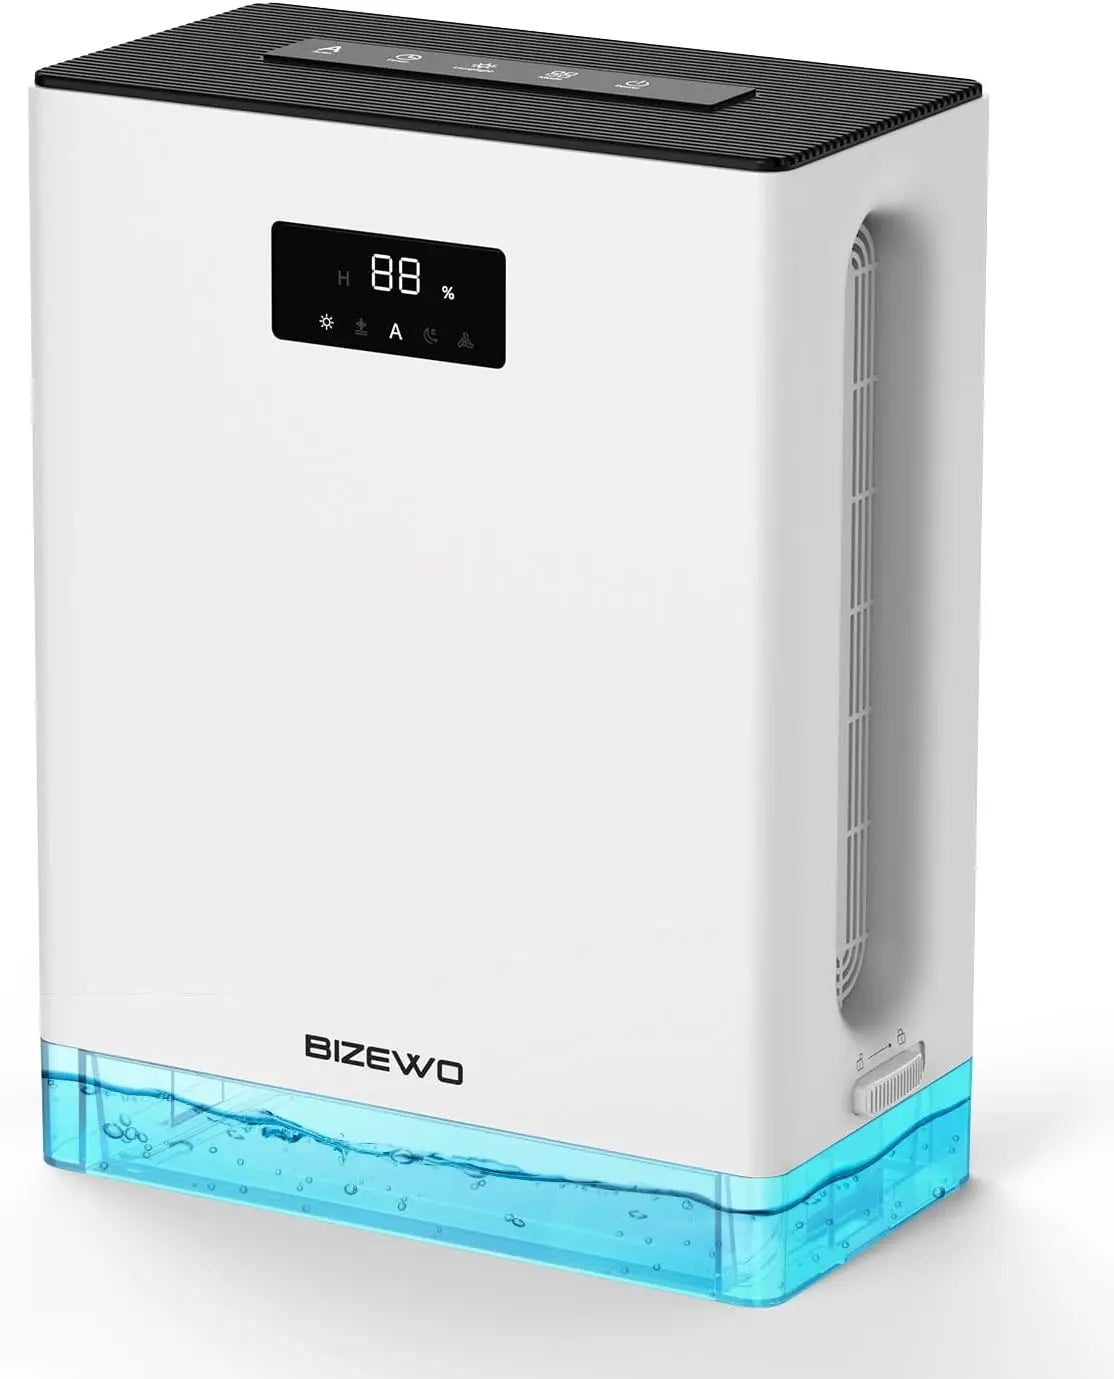 BIZEWO Dehumidifier for Home, 101 oz Water Tank, (950 sq.ft